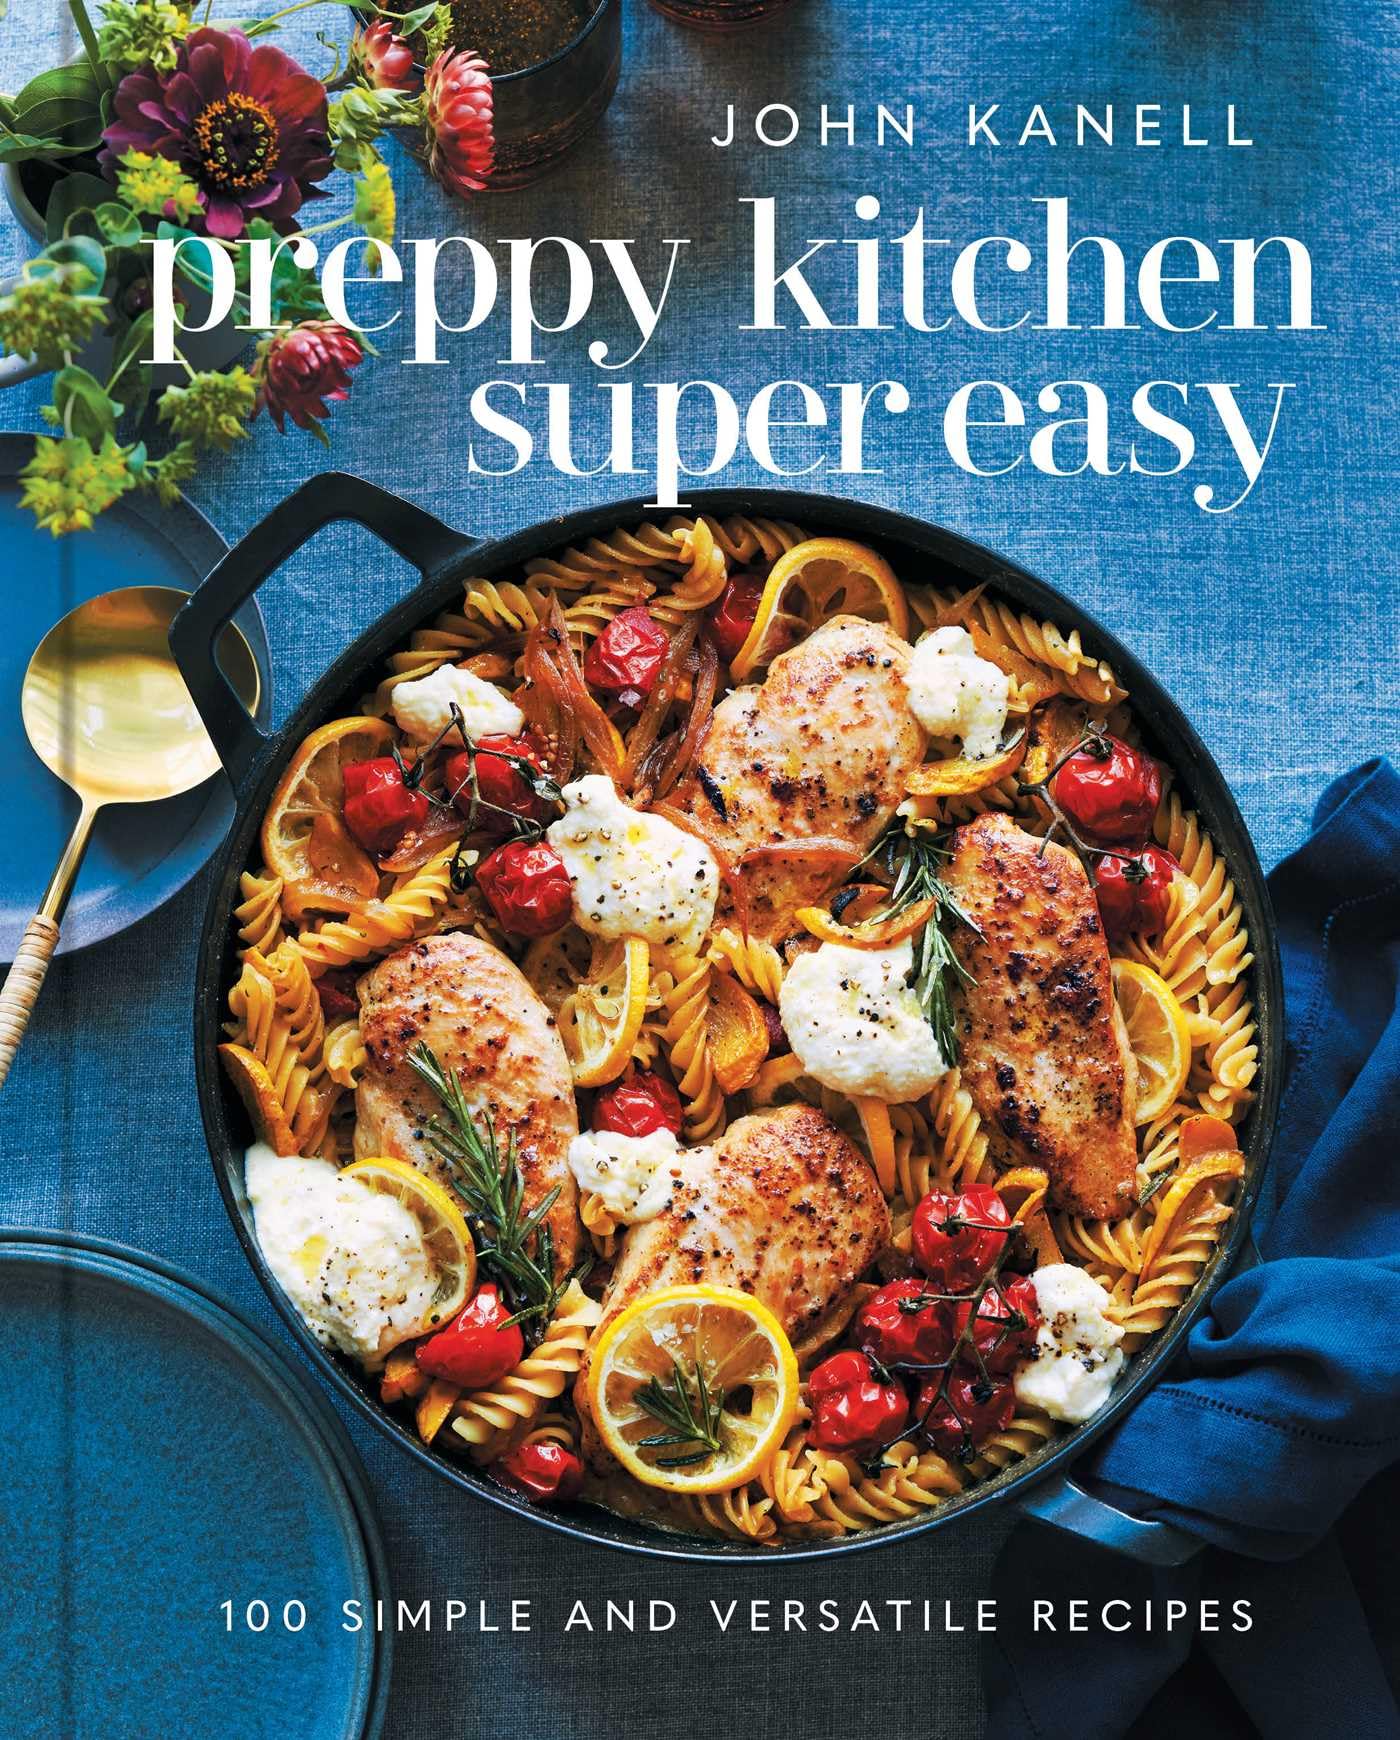 Preppy Kitchen Super Easy: 100 Simple and Versatile Recipes